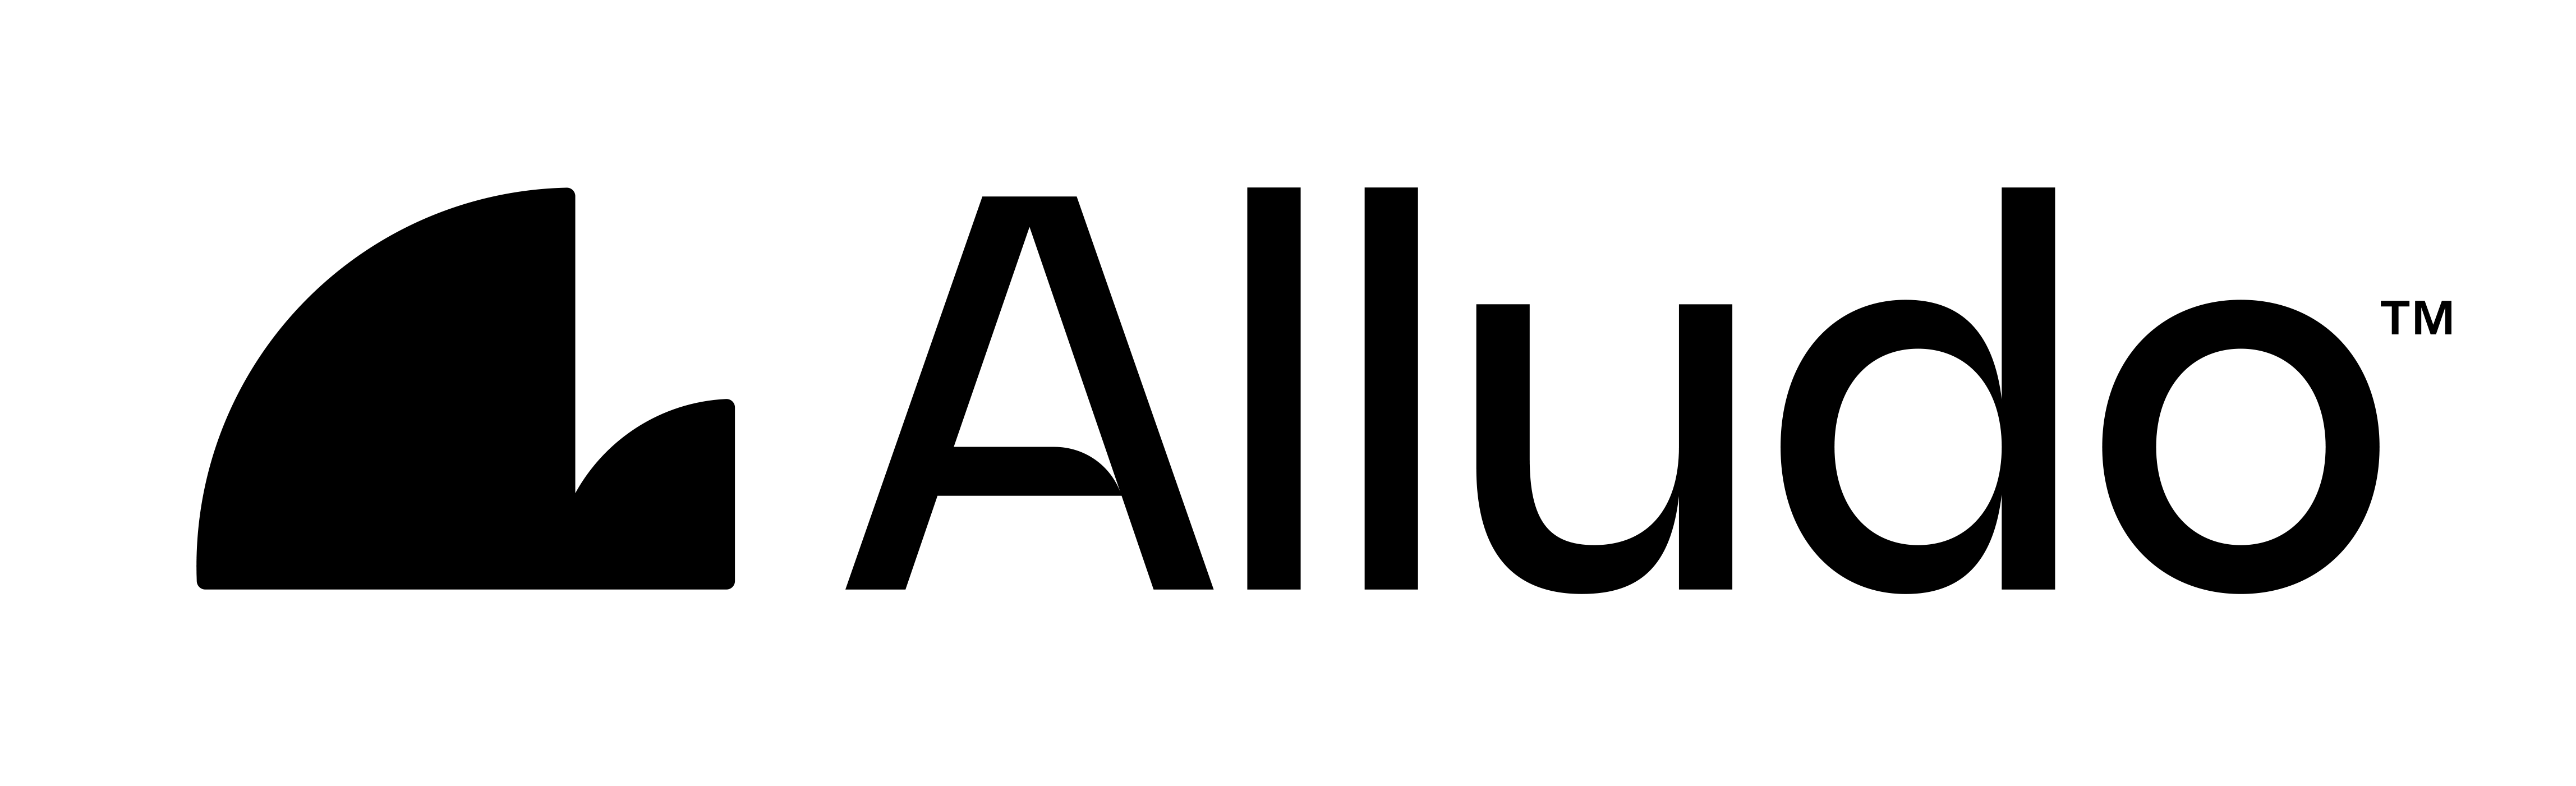 Alludo™ logo